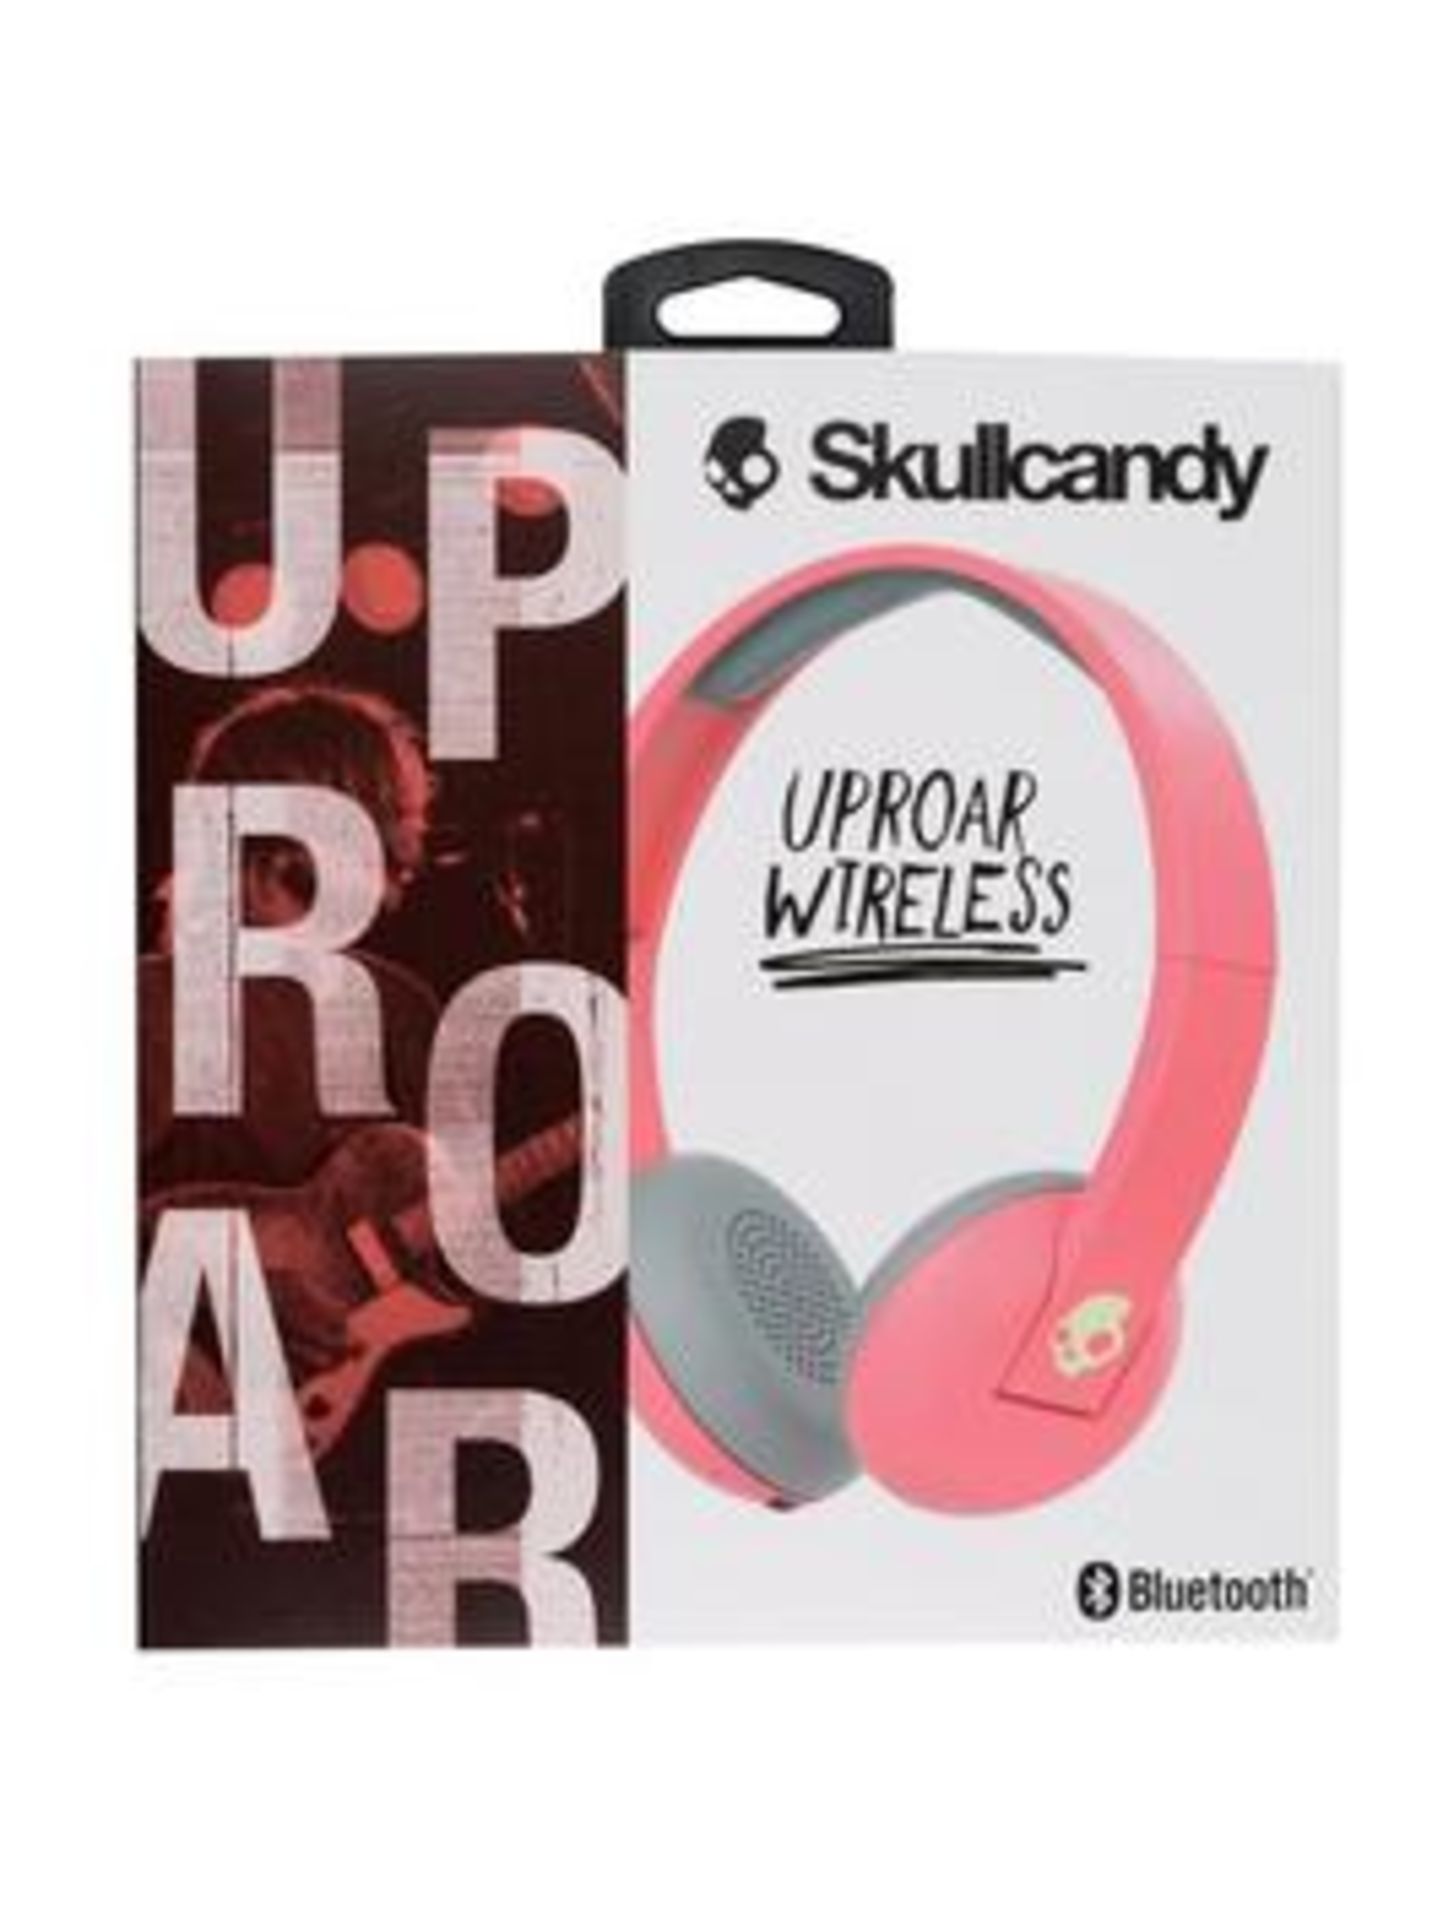 V Brand New Skullcandy Uproar Wireless On-Ear Headphones - Bluetooth Connectivitiy - 10 Hour Battery - Image 3 of 3